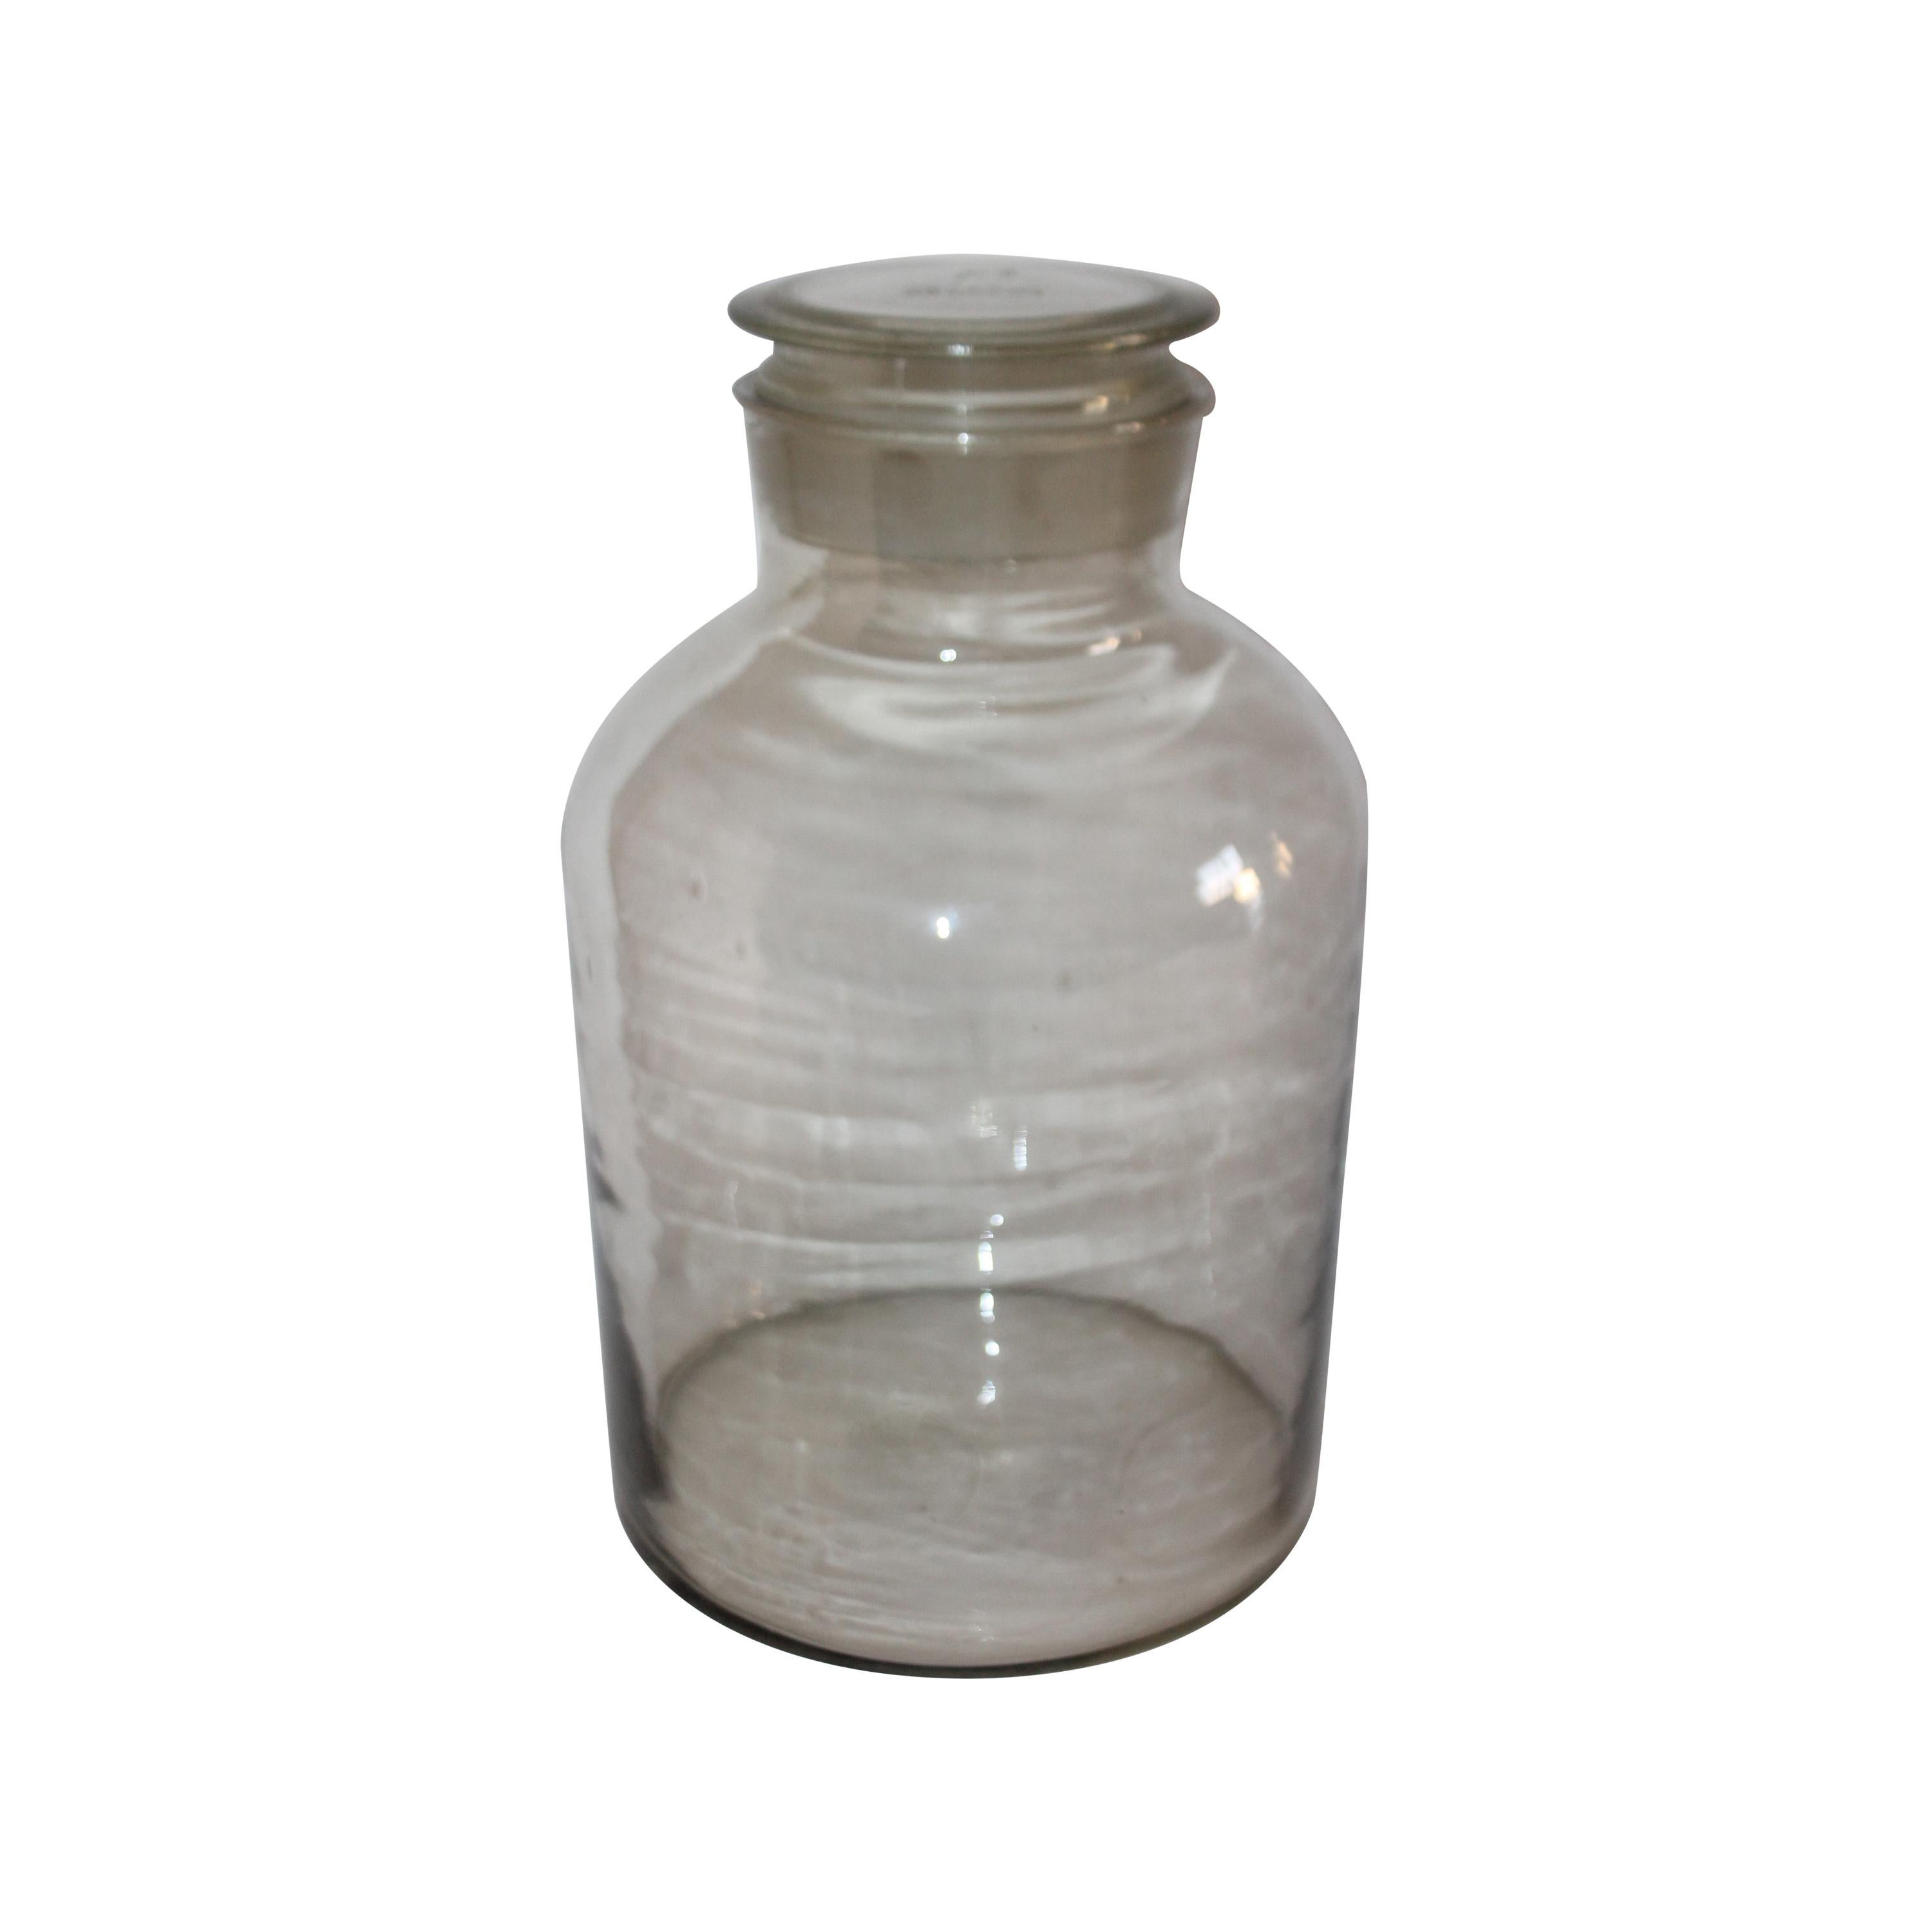 19th Century Apothecary Jar, Monumental Size